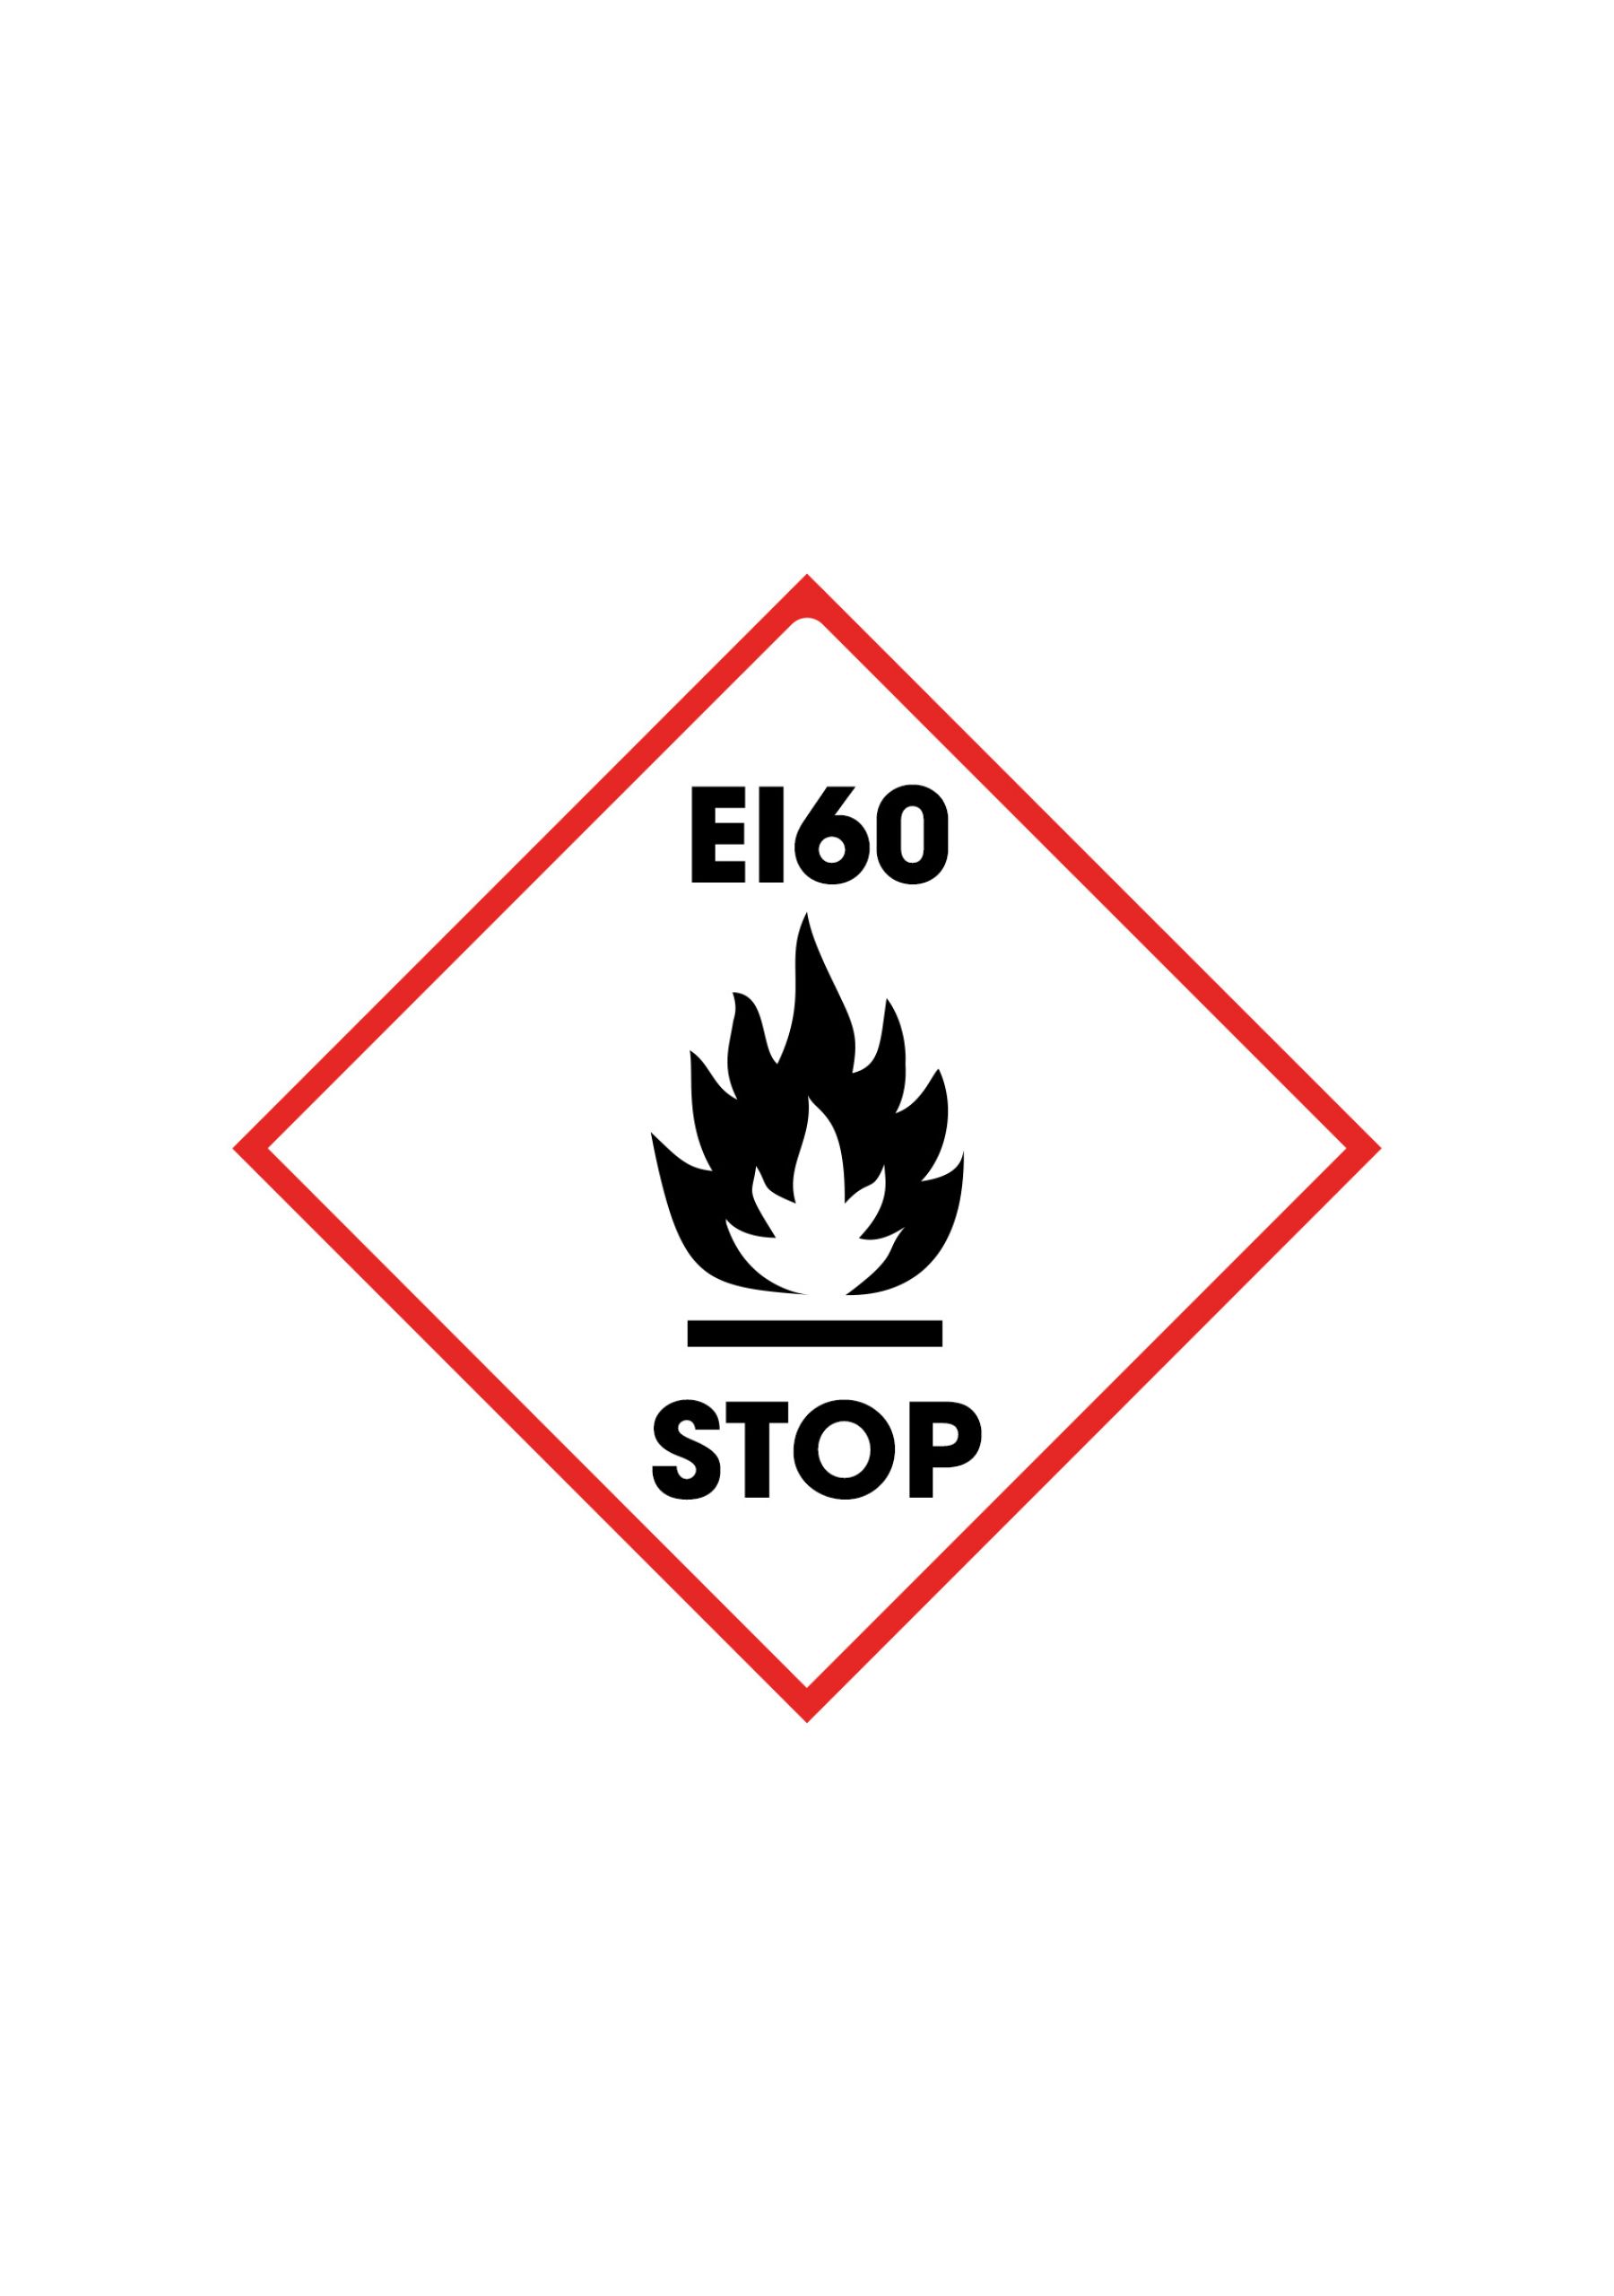 Fire retardancy EI60